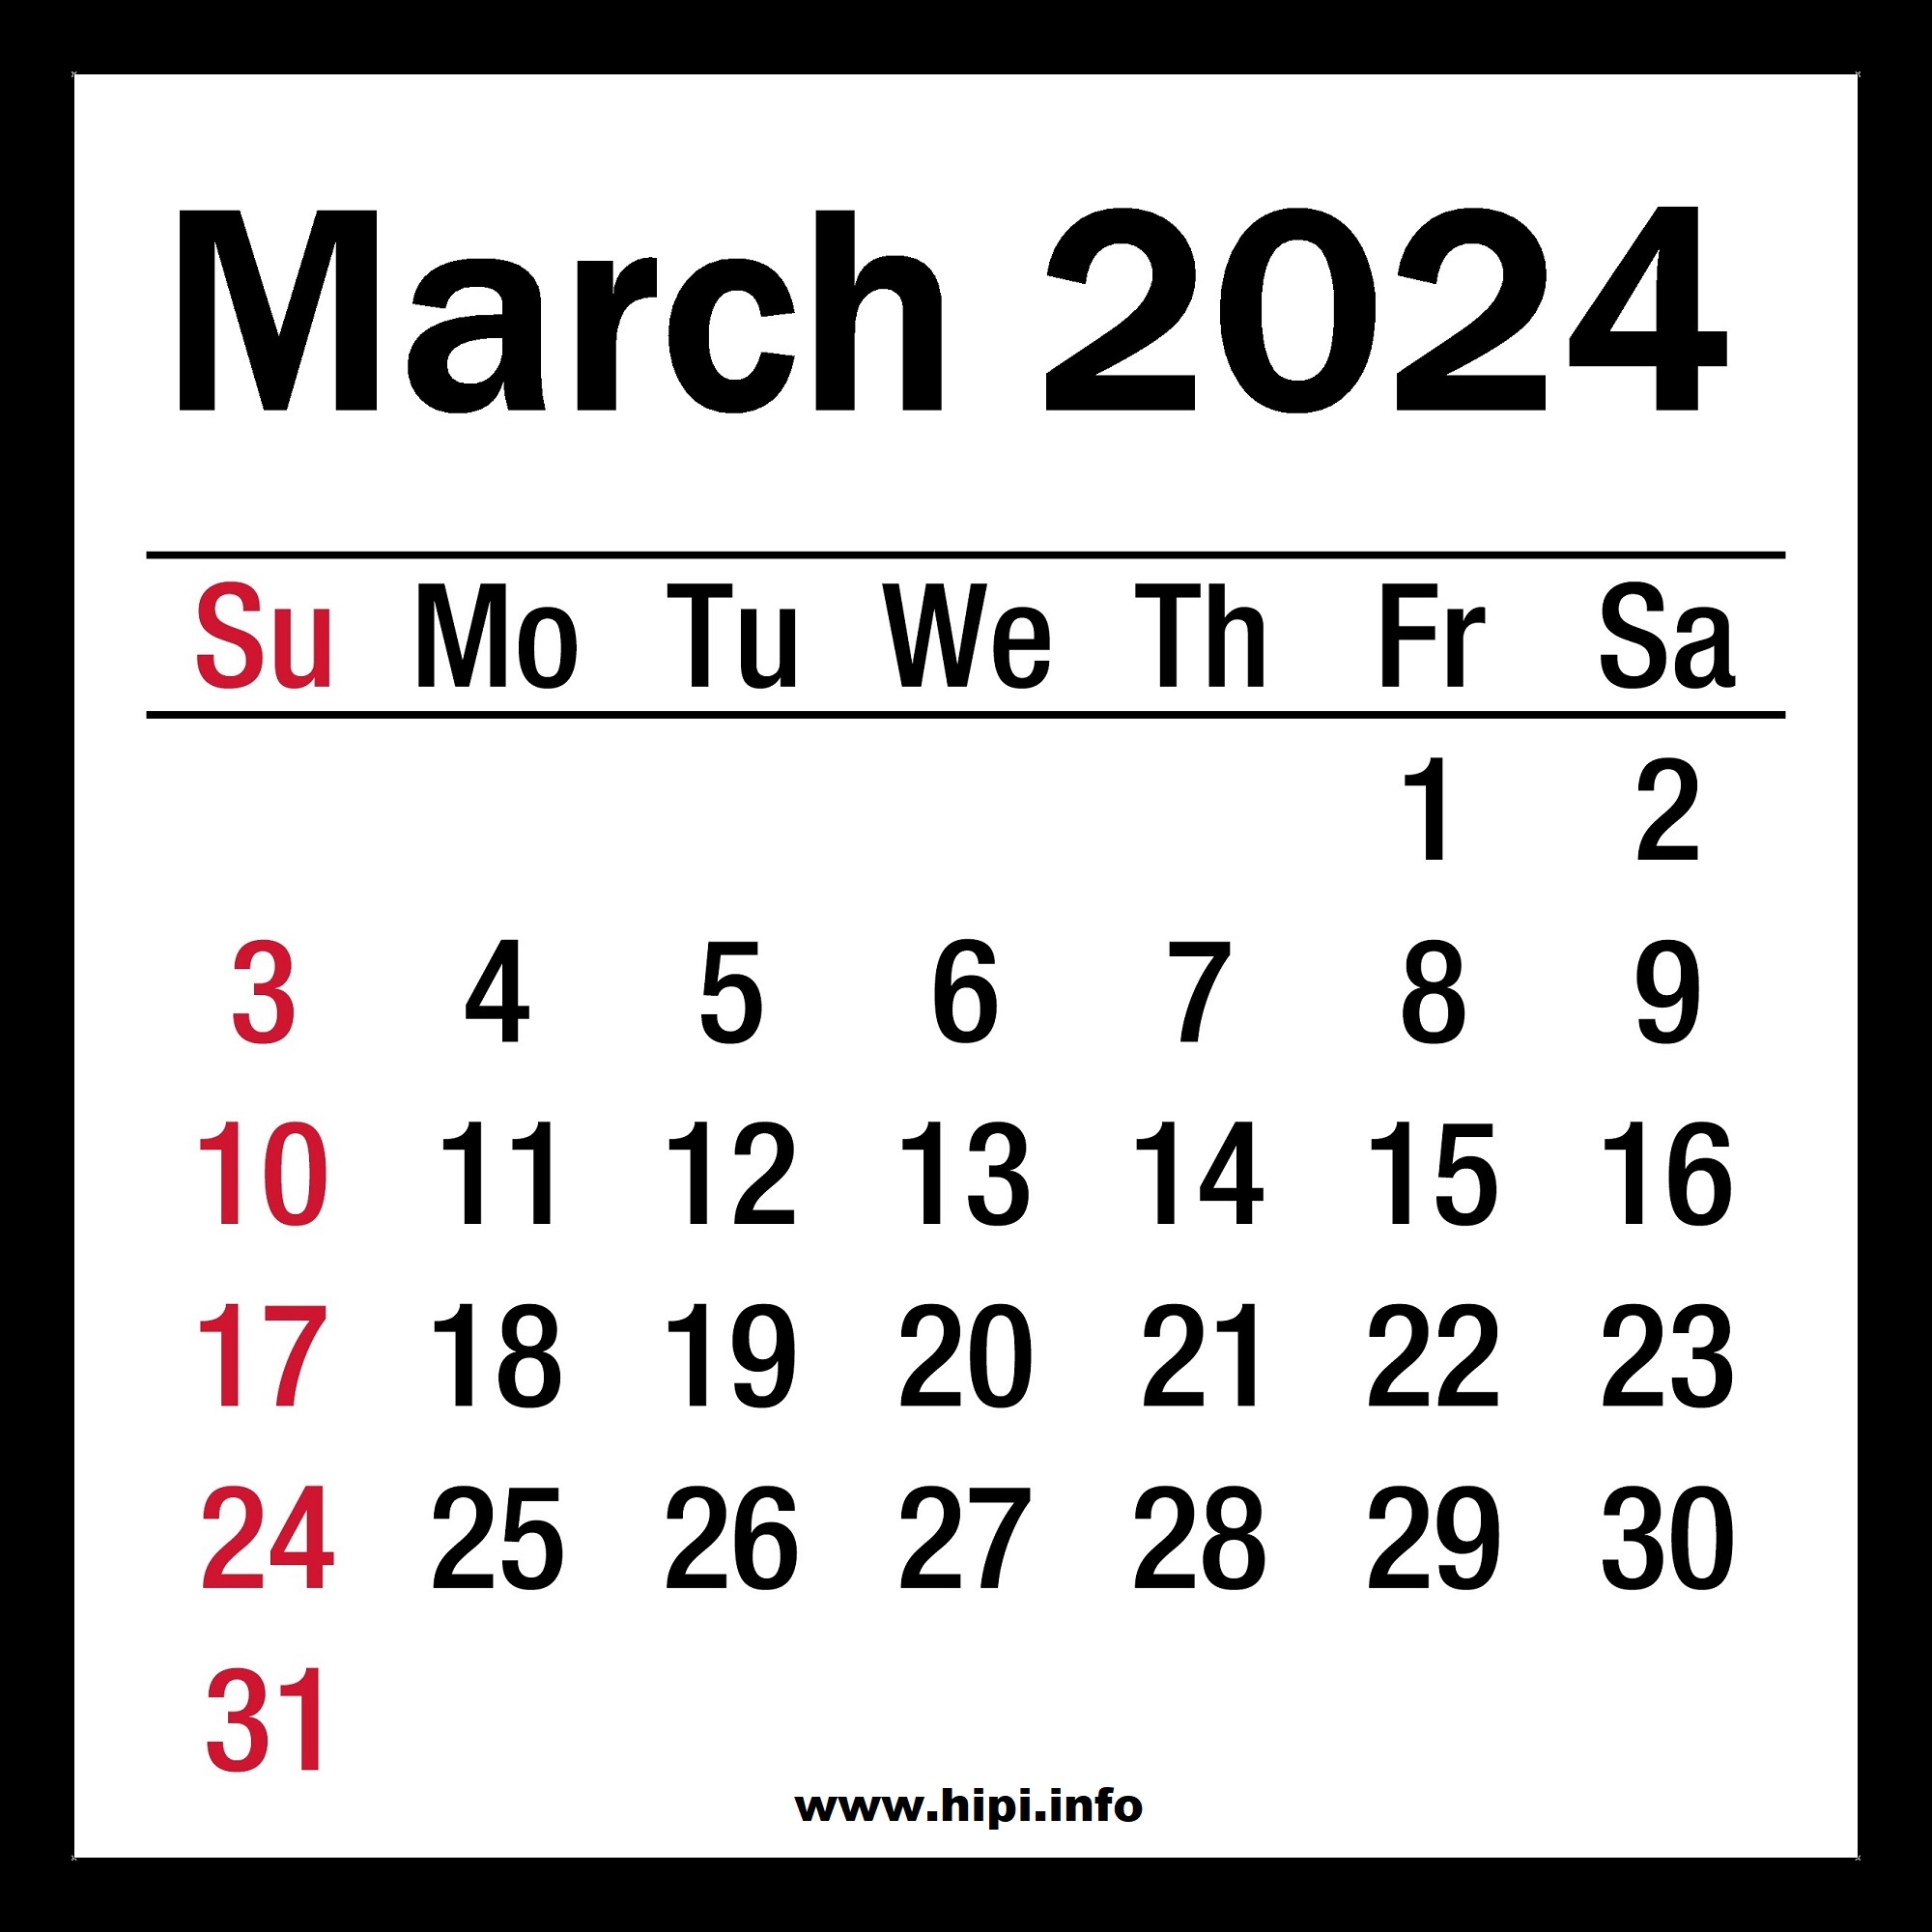 March 2024 Calendar - Hipi.info